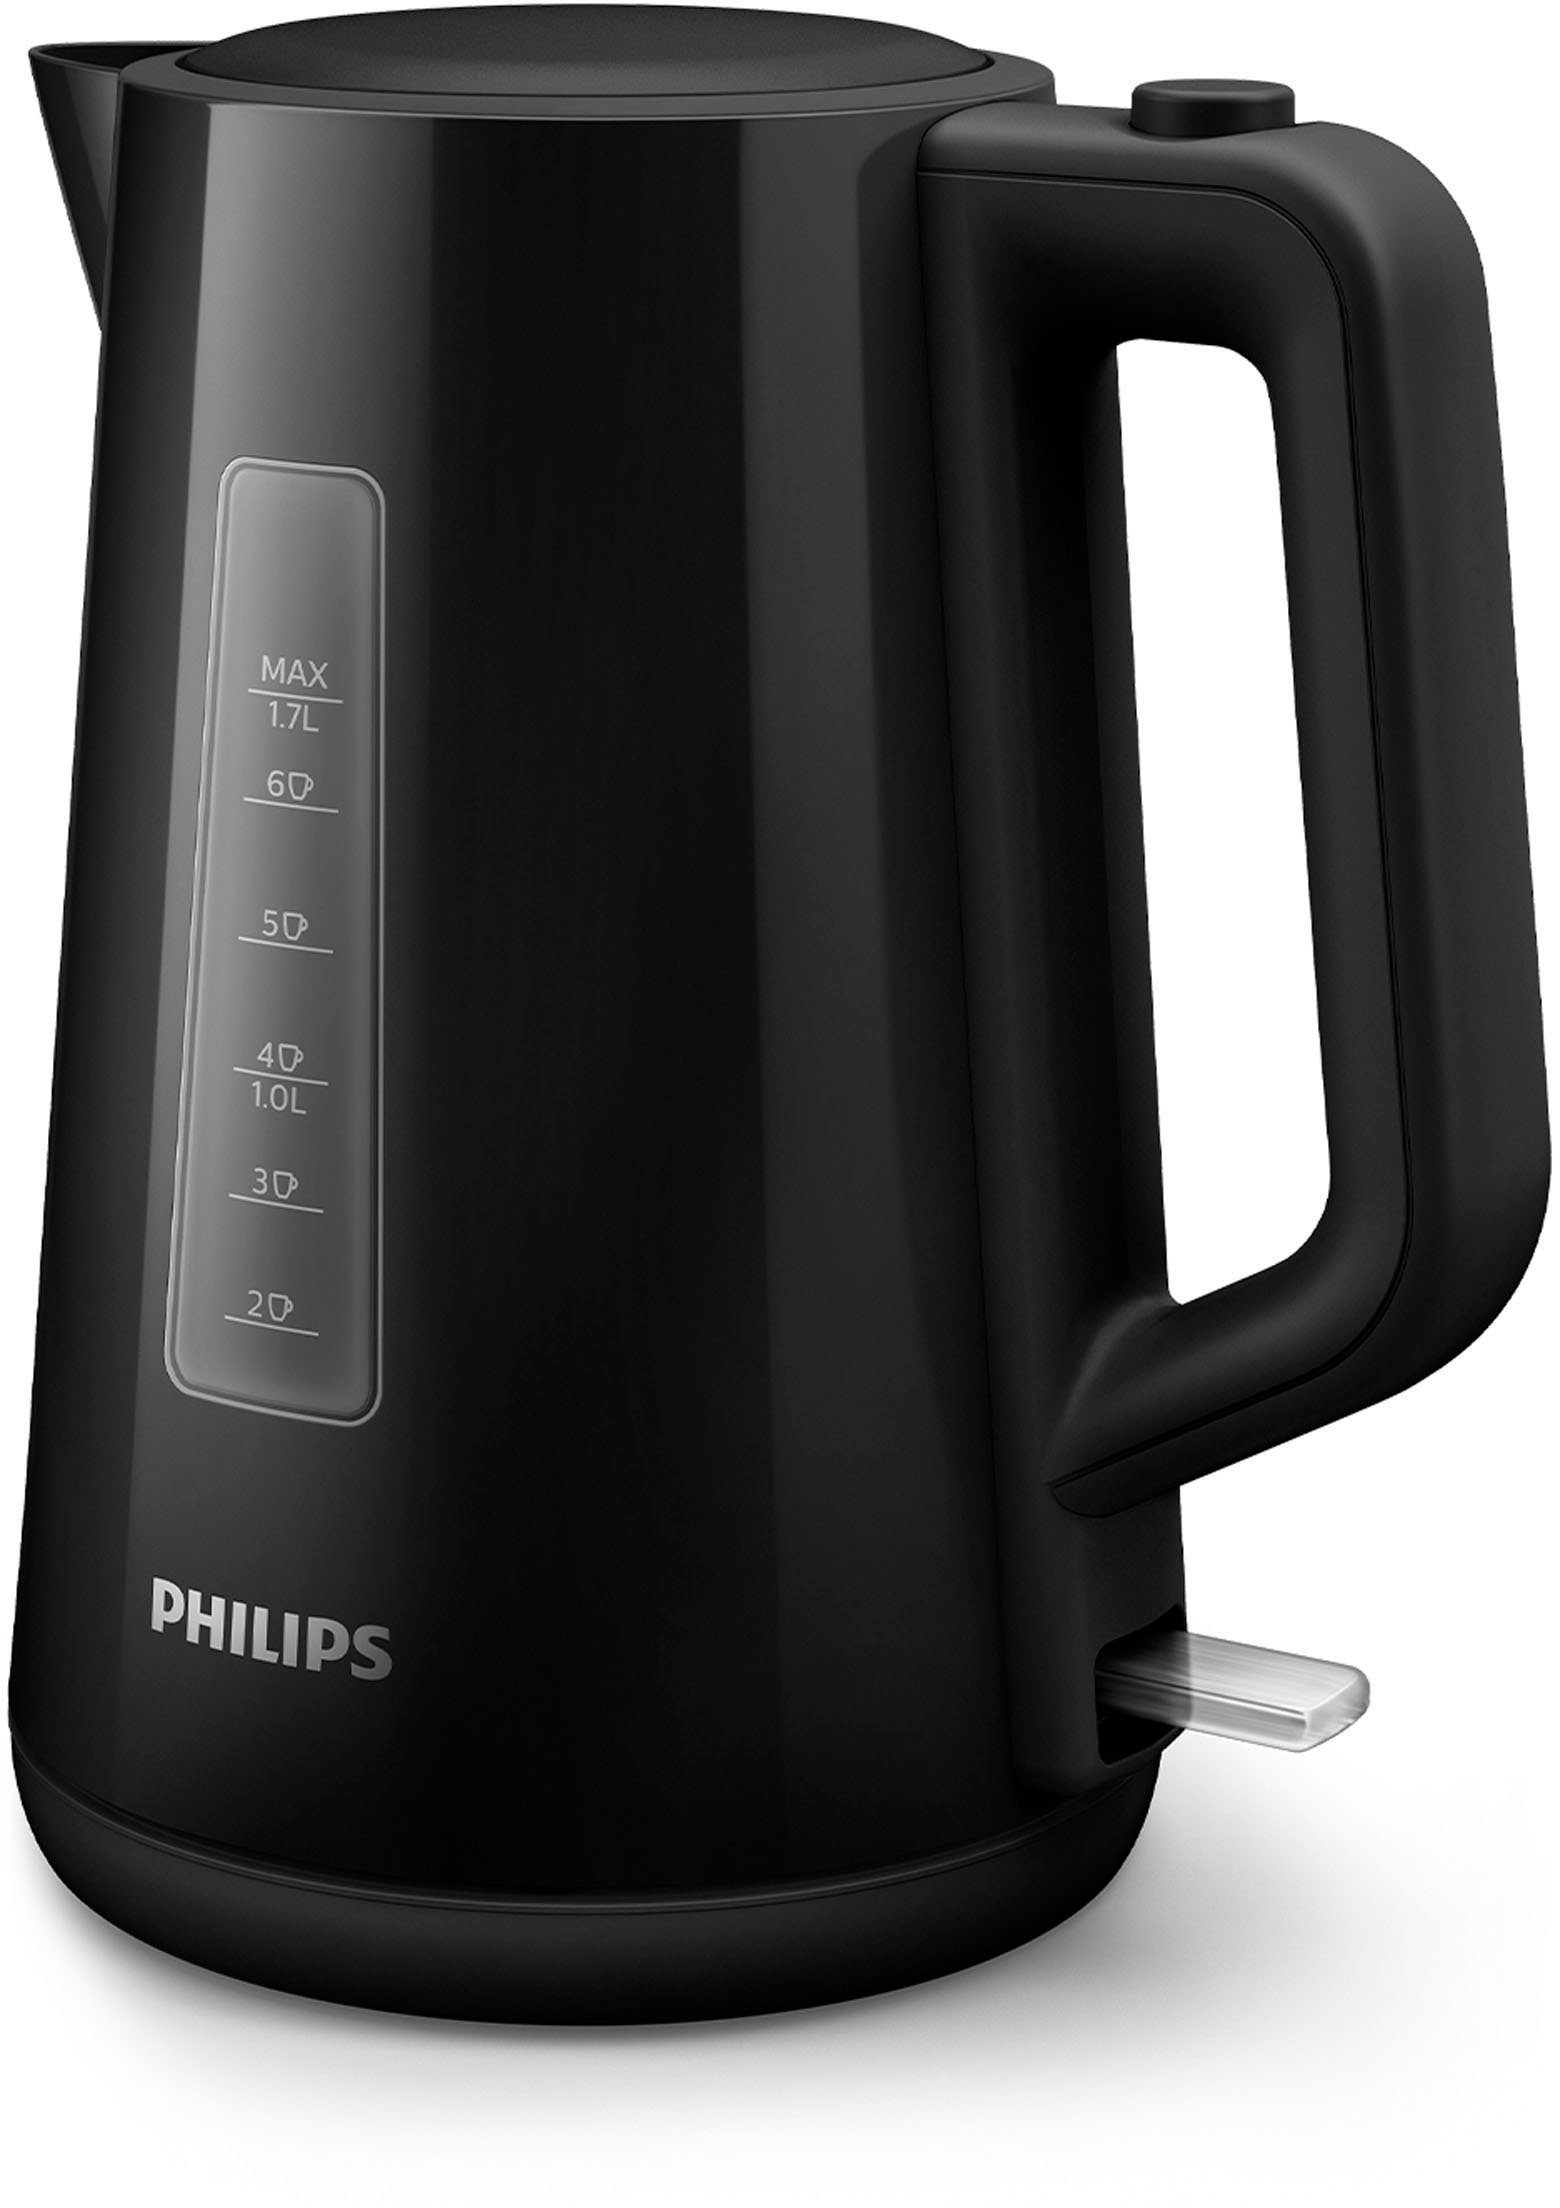 HD9318/20, l, 1,7 2200 schwarz Philips 3000 Series W, Wasserkocher